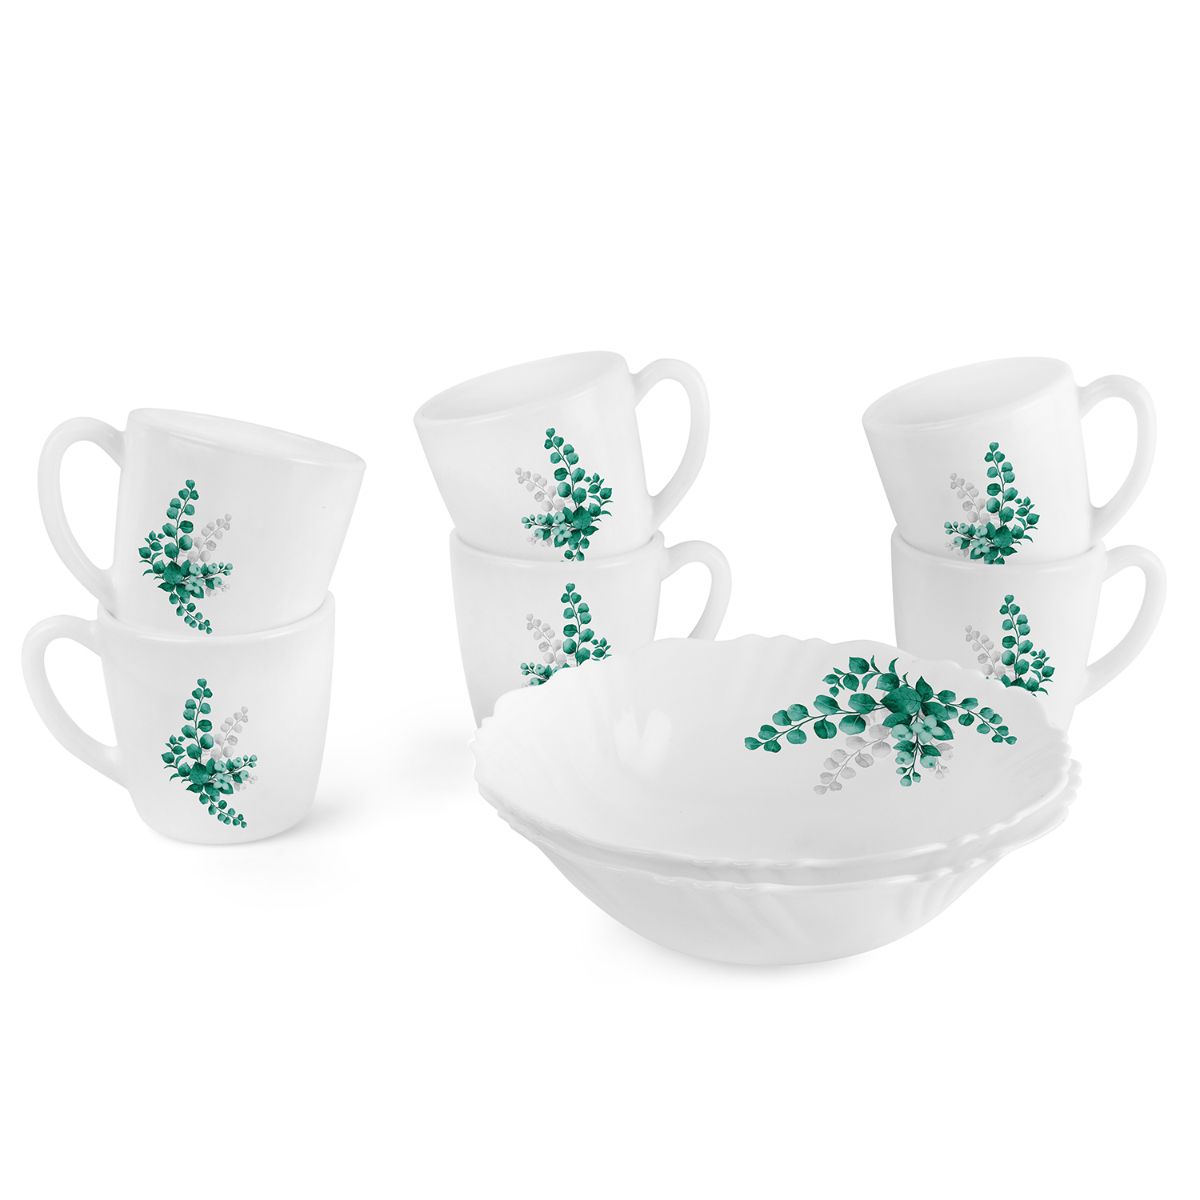 Imperial Series Quick Bite Bowl & Mug Gift set, 8 Pieces Aqua Leaves / 8 Pieces